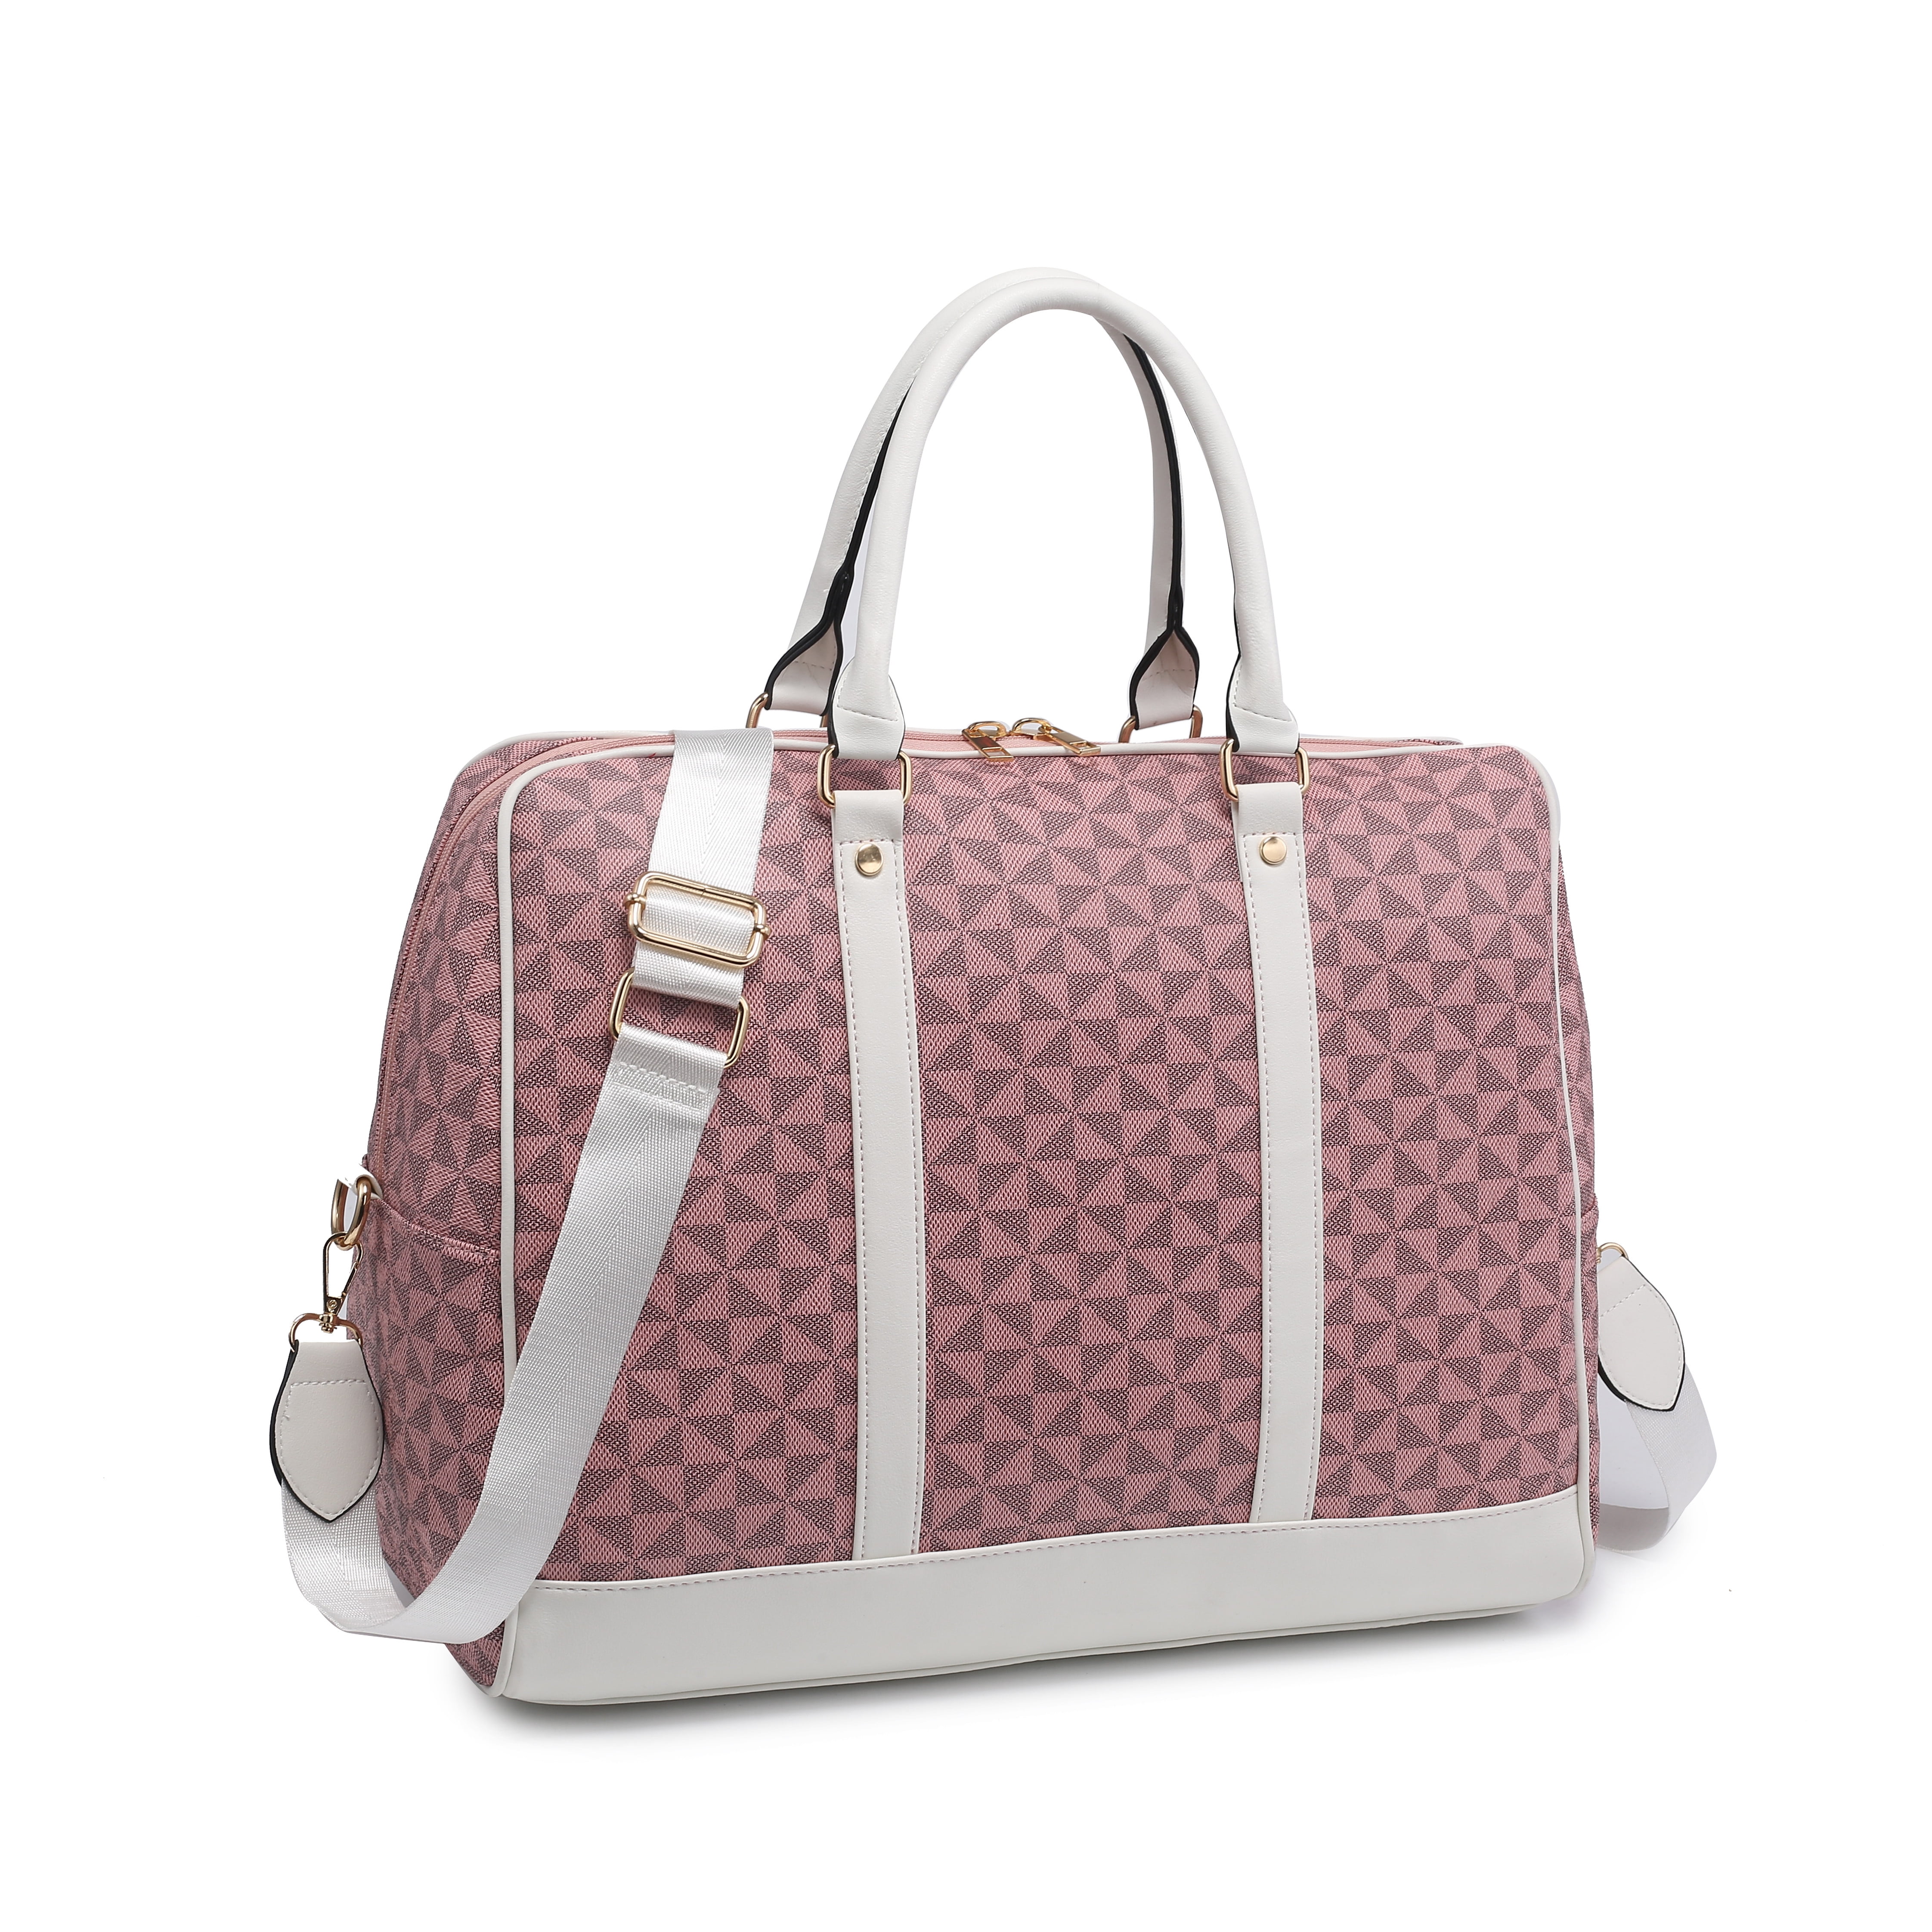 XB Travel Duffle Bag for Women & Men Vegan Leather Overnight Weekender Luggage  Tote Bag Large Handbag 